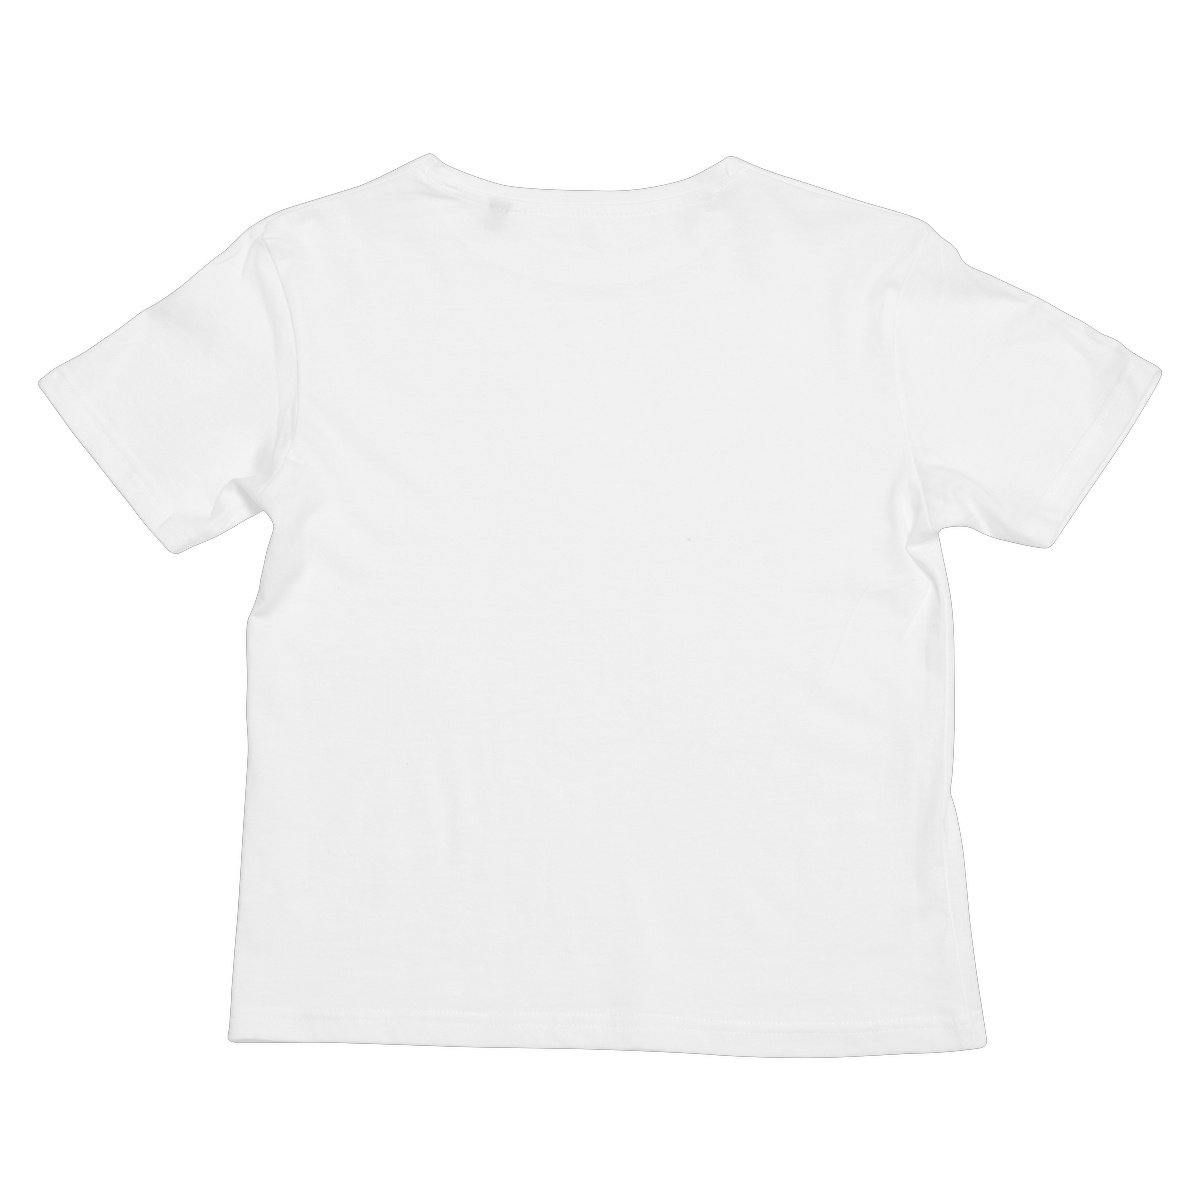 Cobra Dai Logo Kids Retail T-Shirt - Lush and Tidy 